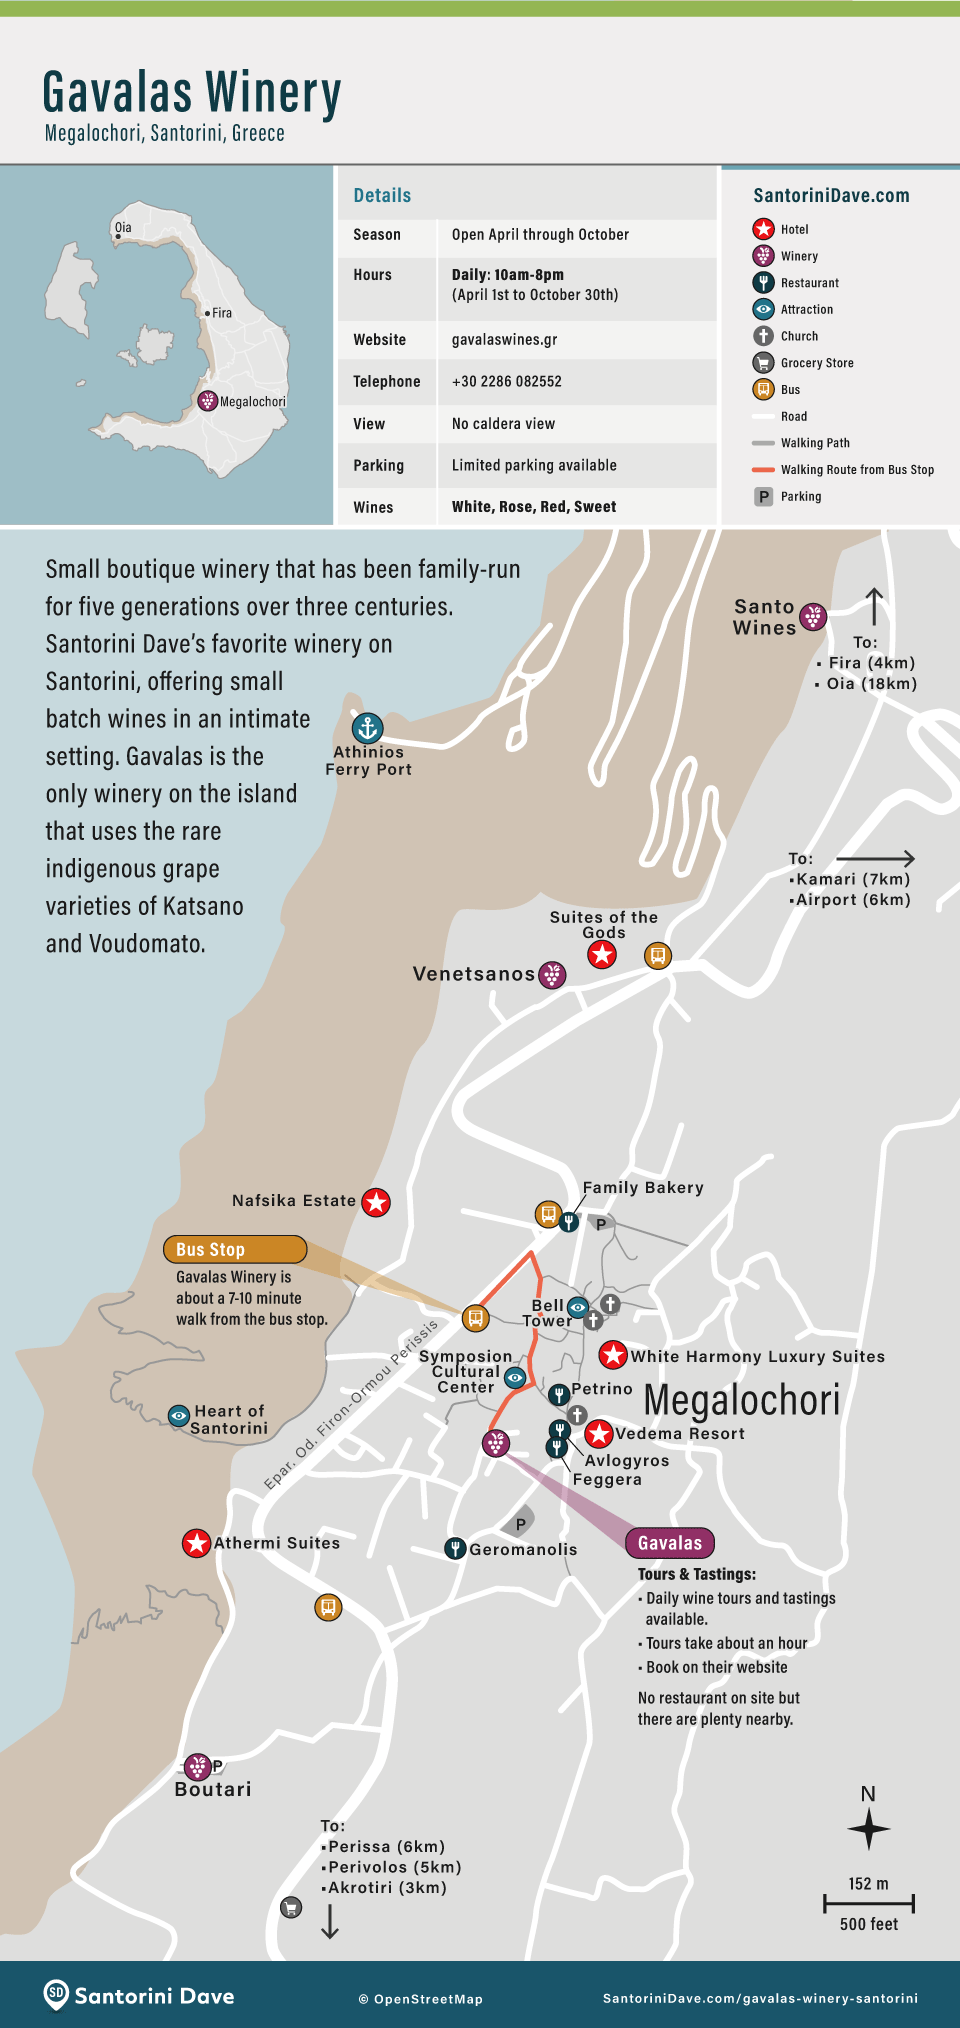 Map of the area surrounding Gavalas Winery in Santorini.